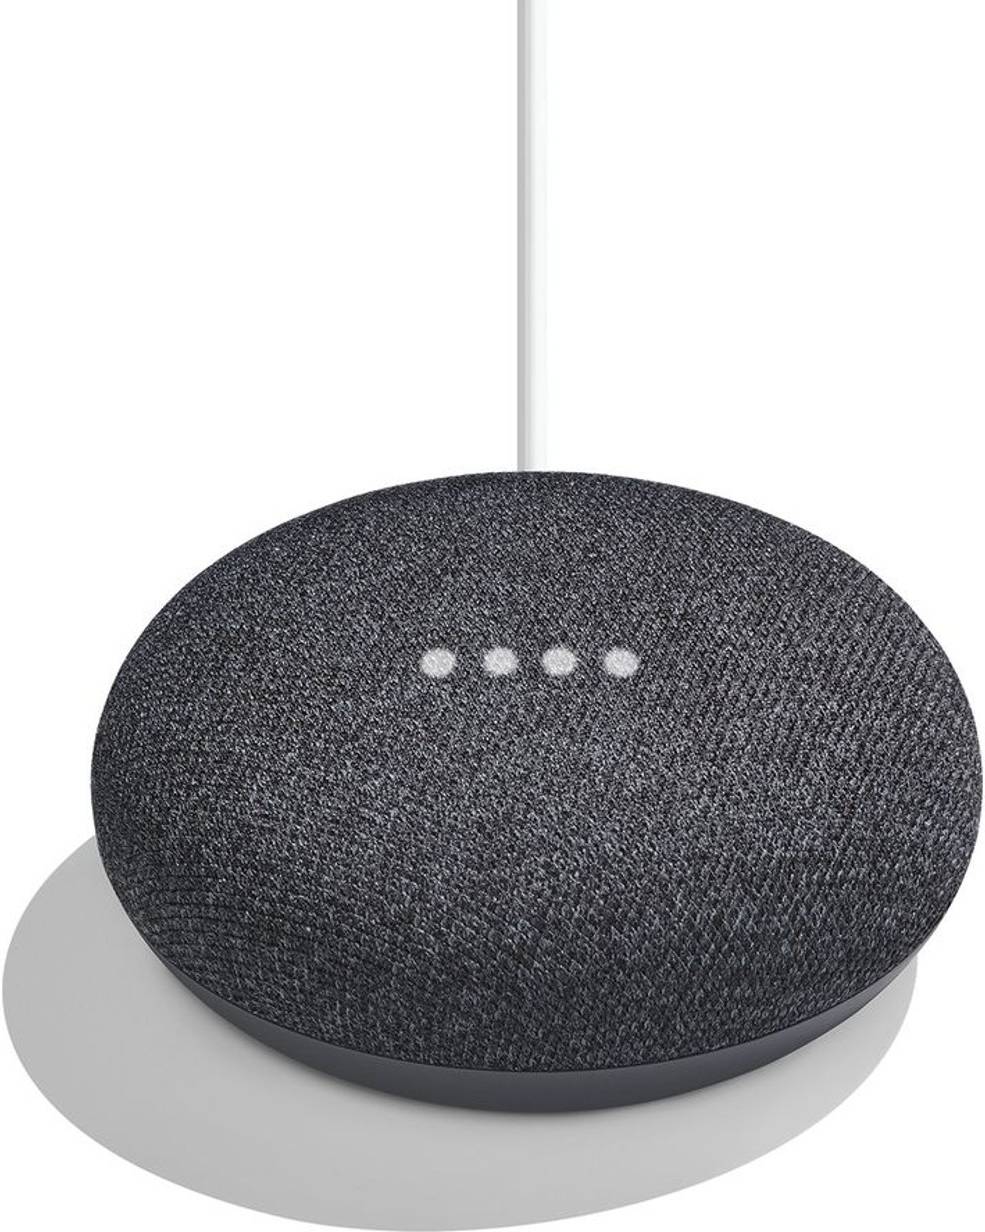 Google Home Mini - Smart Assistant Speaker - Charcoal